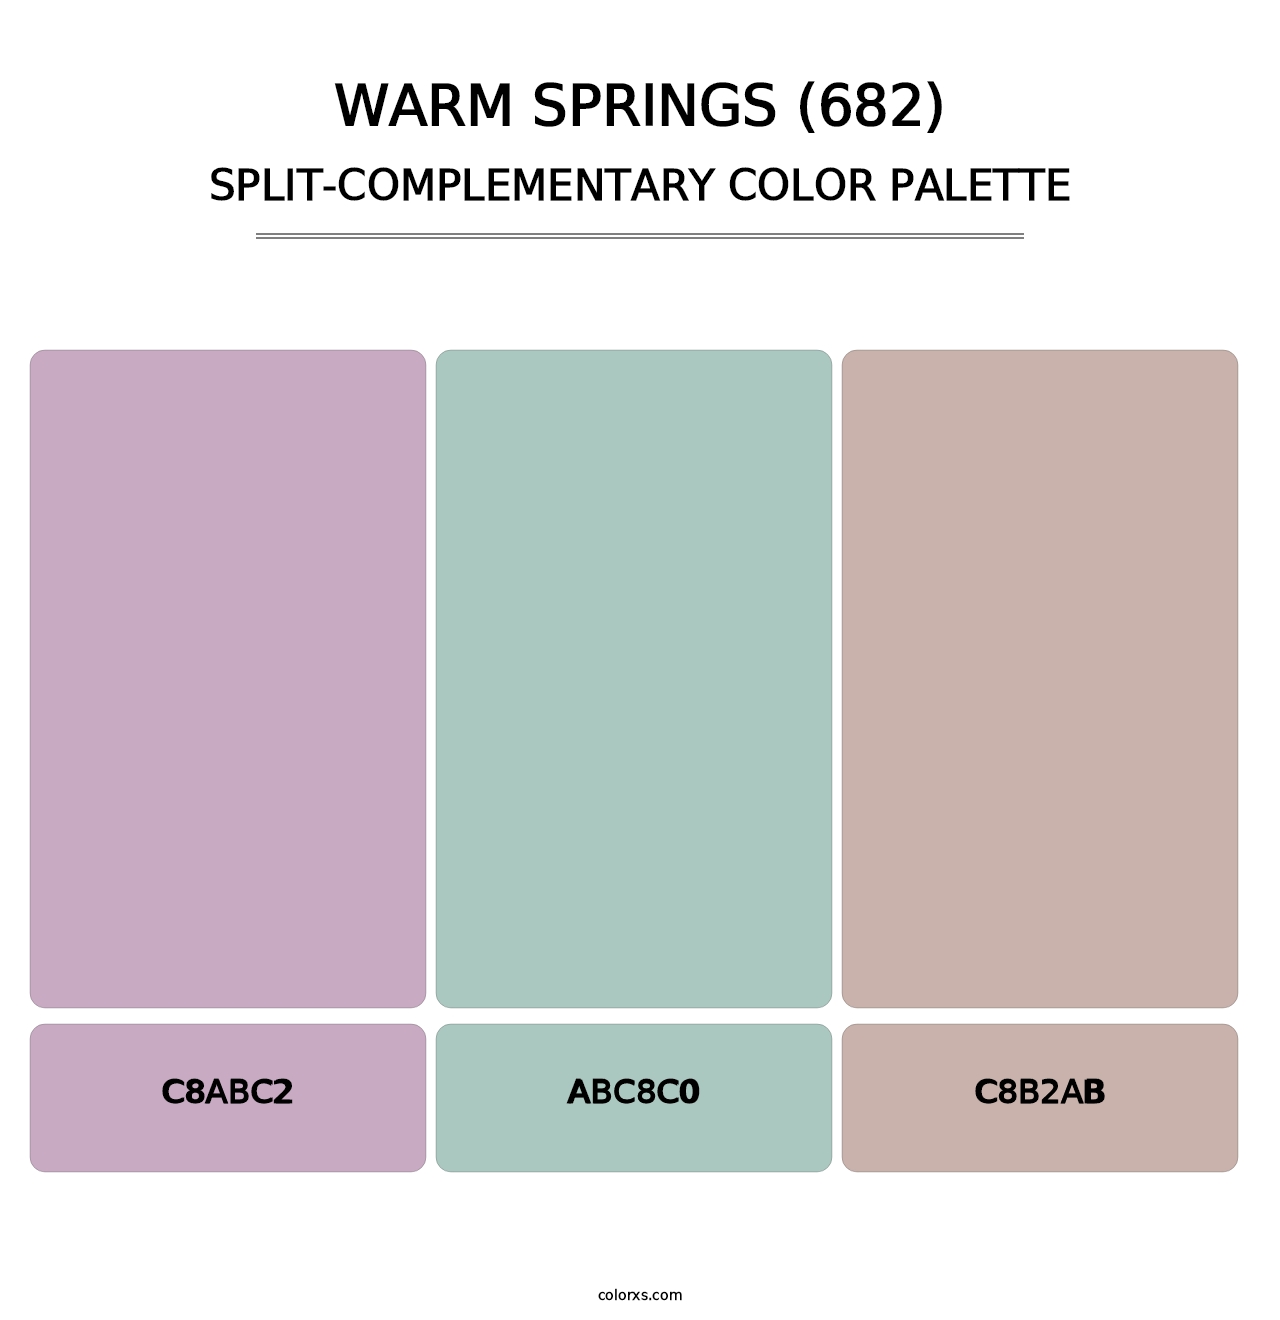 Warm Springs (682) - Split-Complementary Color Palette